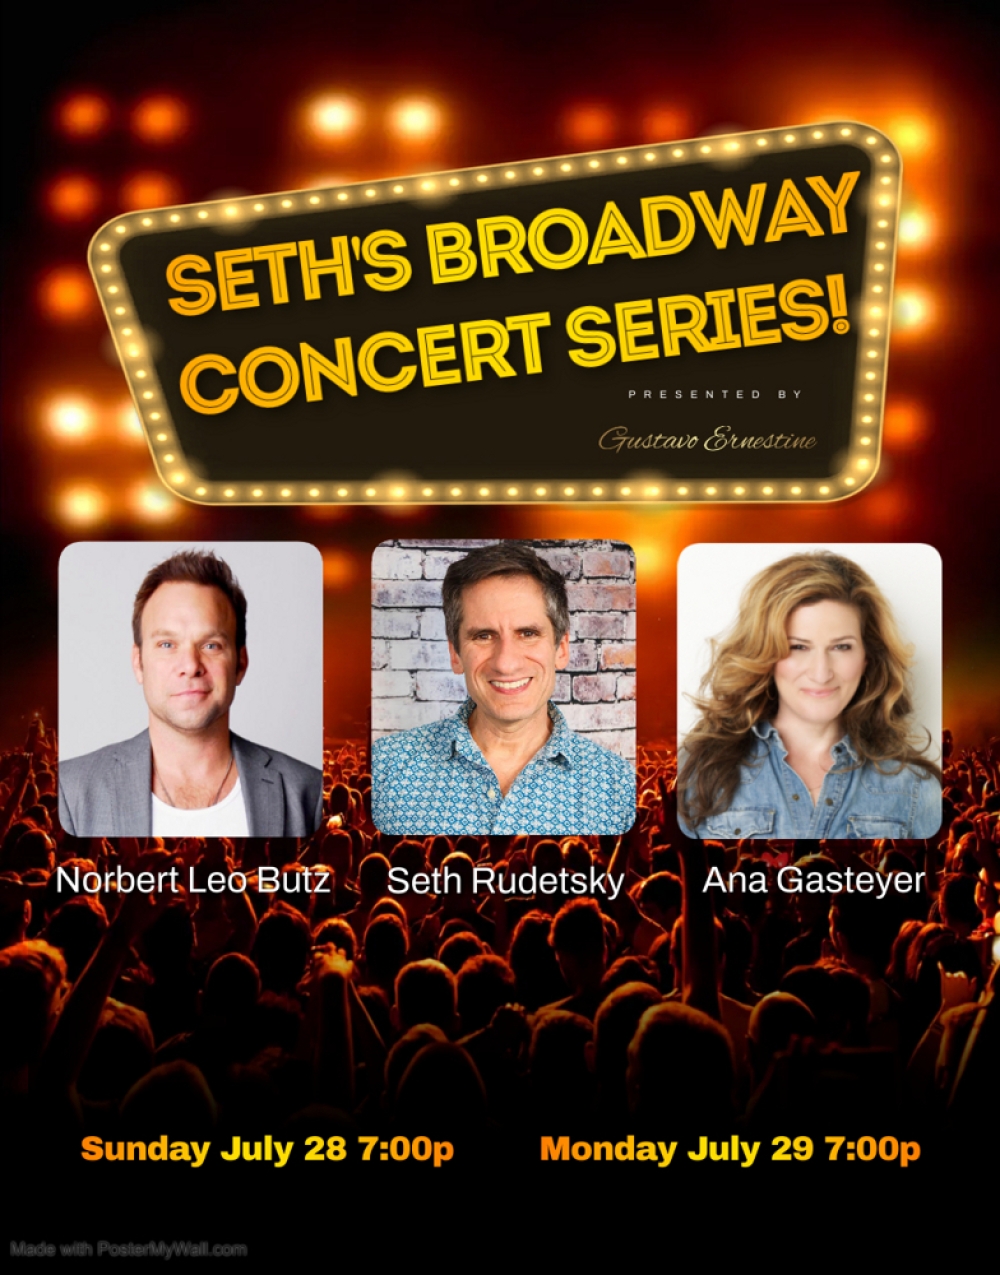 Seth's Broadway Concert Series! at Studebaker